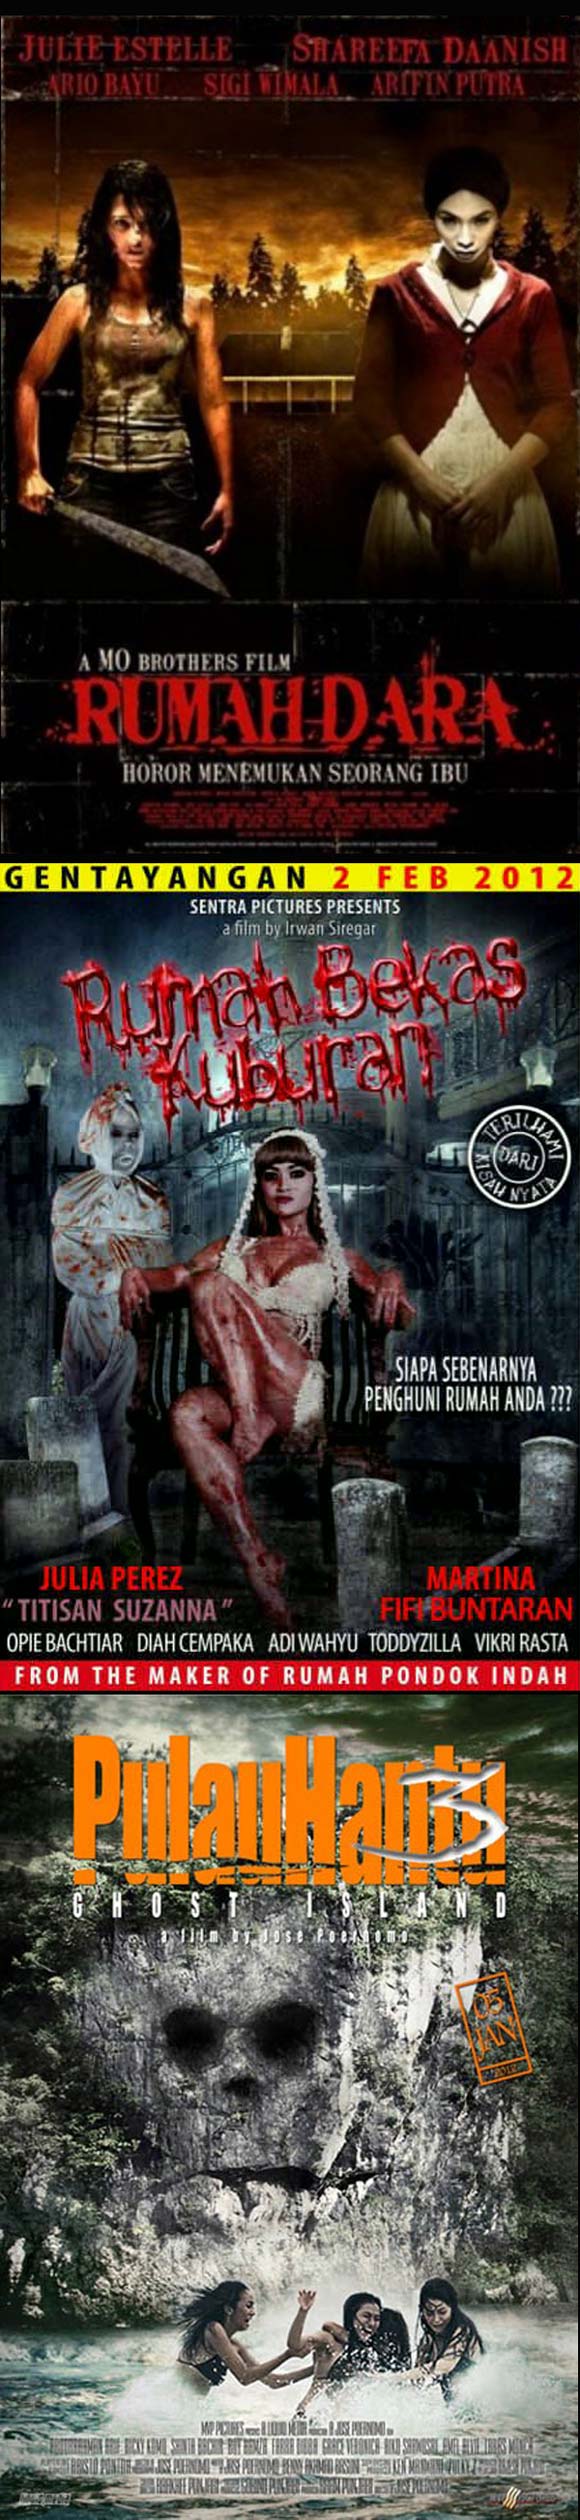 Koleksi Filem Poster Seram Indonesia Yang WTFBBQ (11 